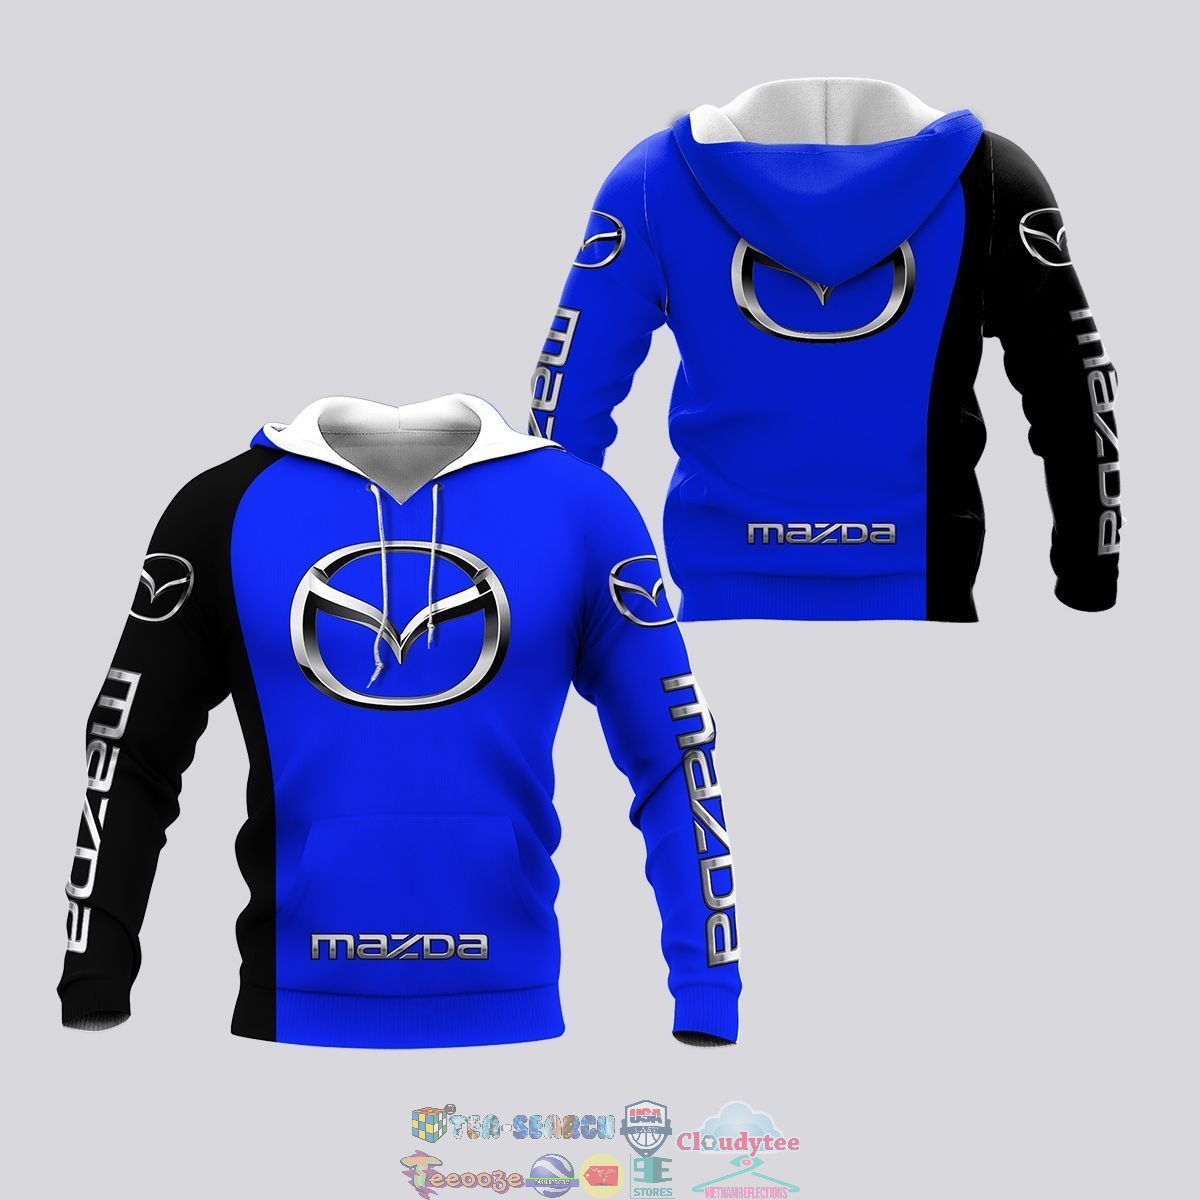 Mazda ver 4 hoodie and t-shirt